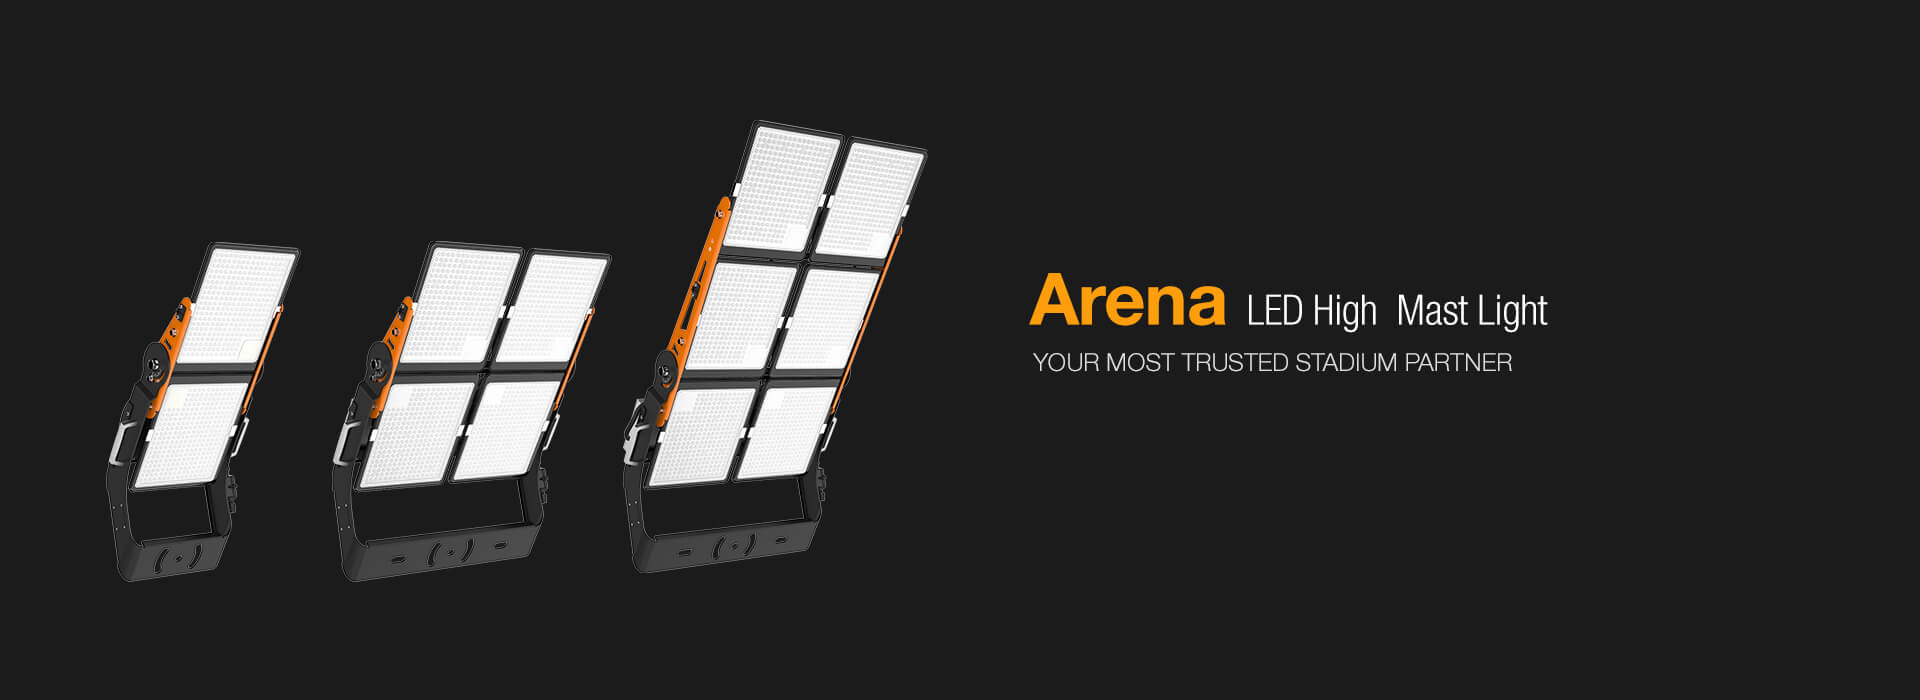 Arena LED High Mast Light